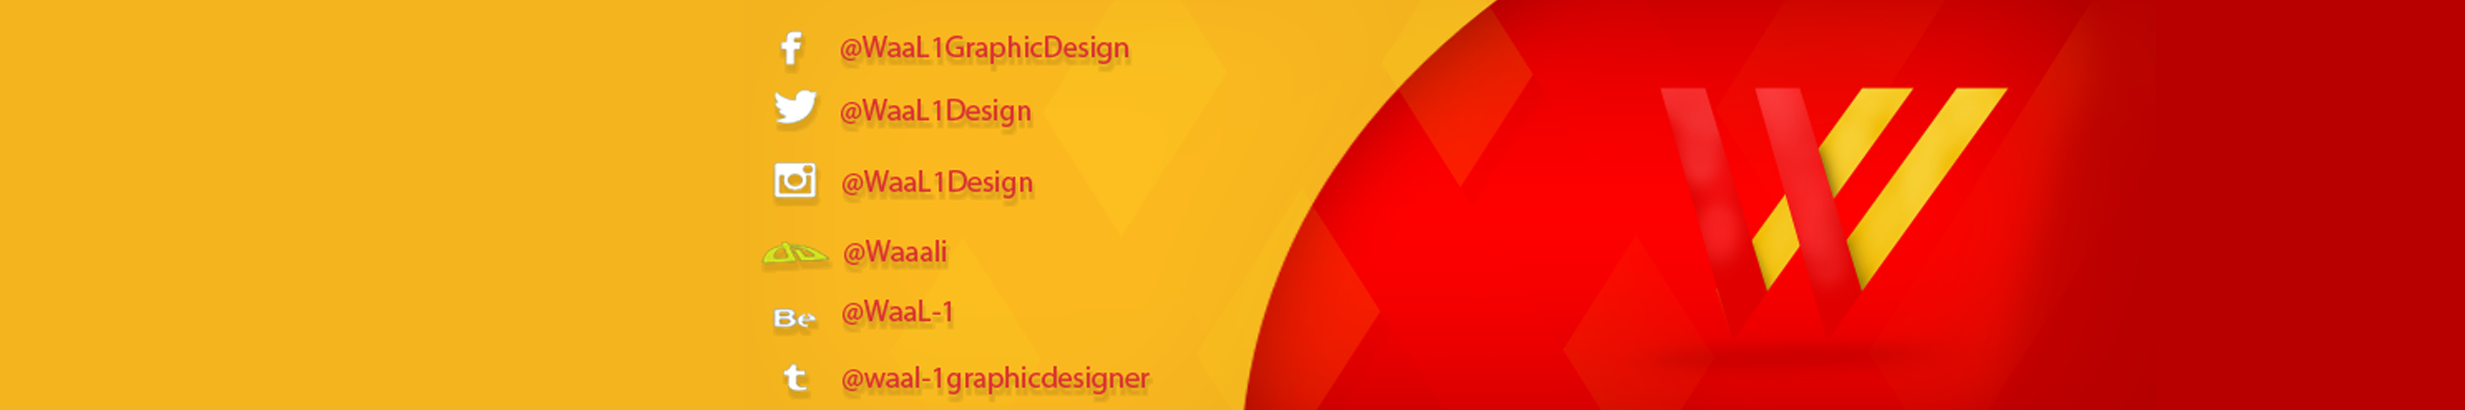 WaaL-1 Graphic Design's profile banner